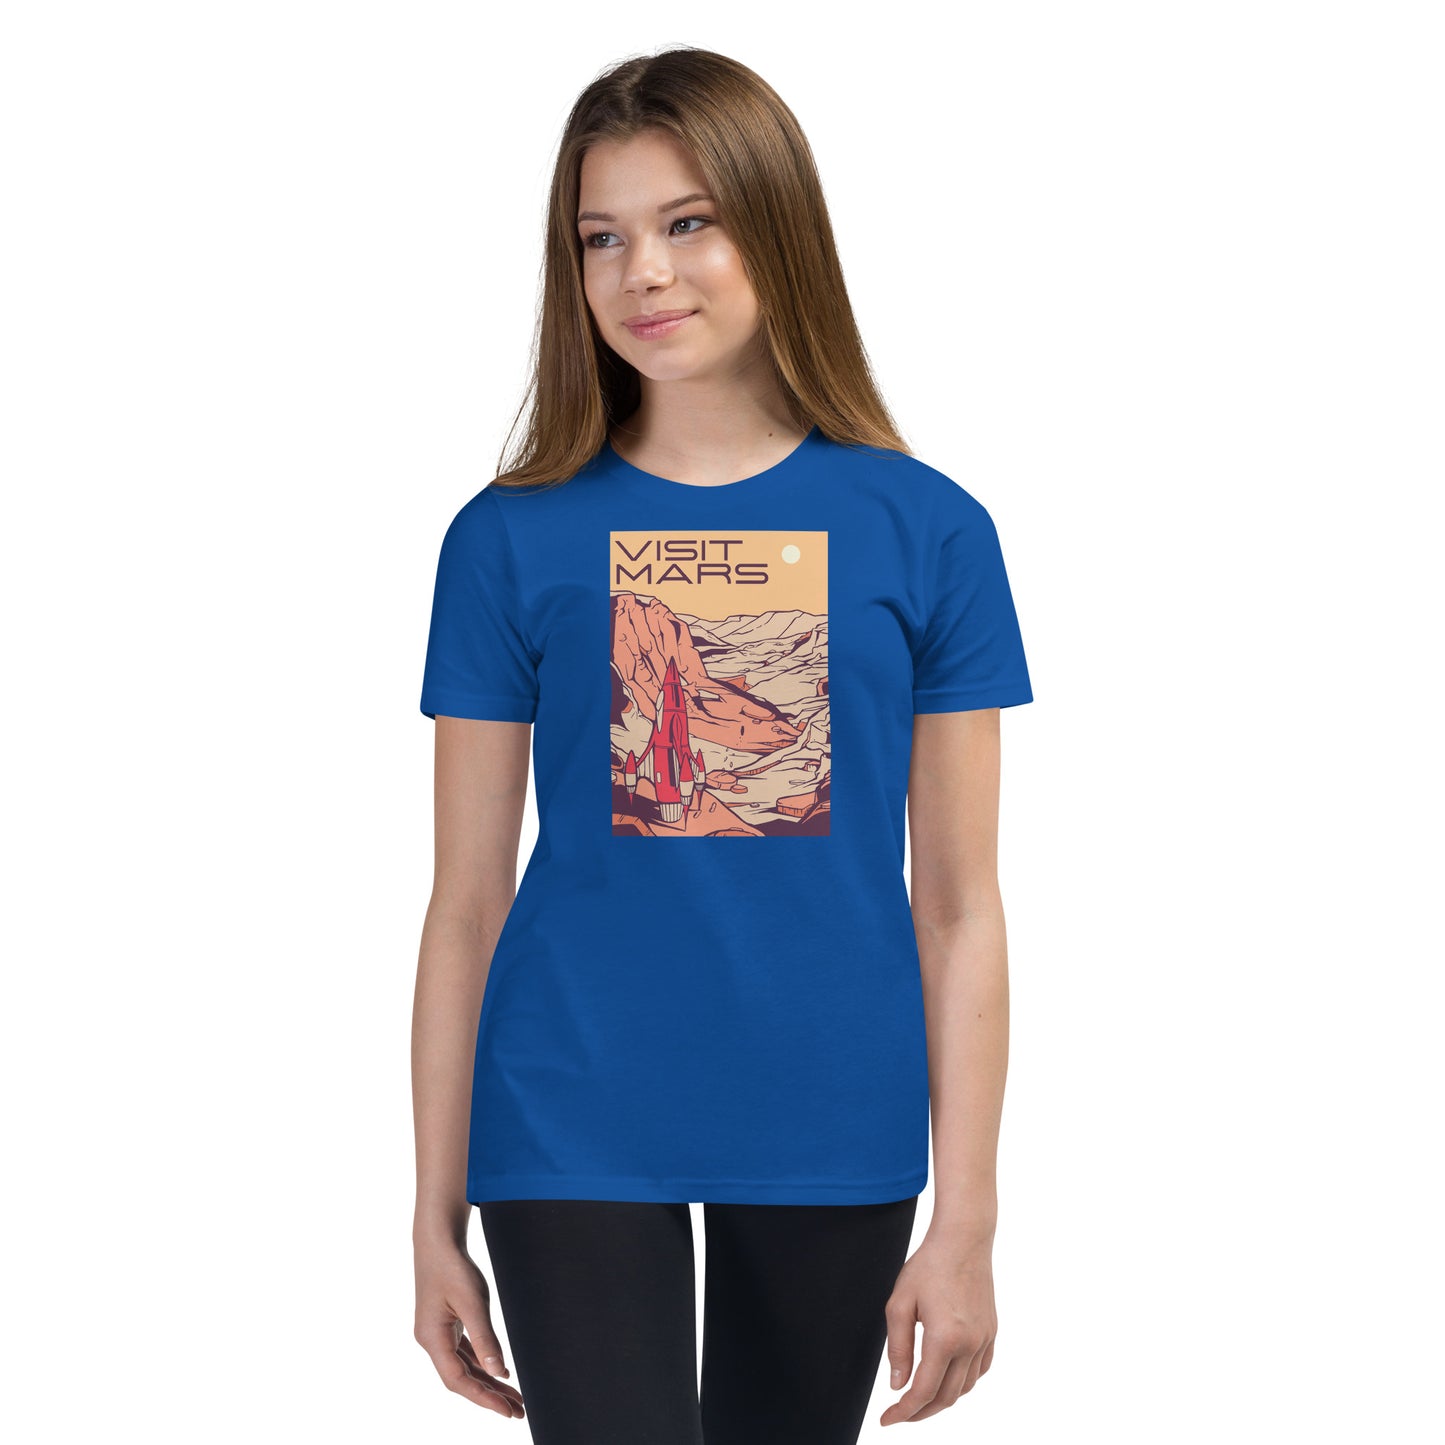 Visit Mars Youth Short Sleeve T-Shirt